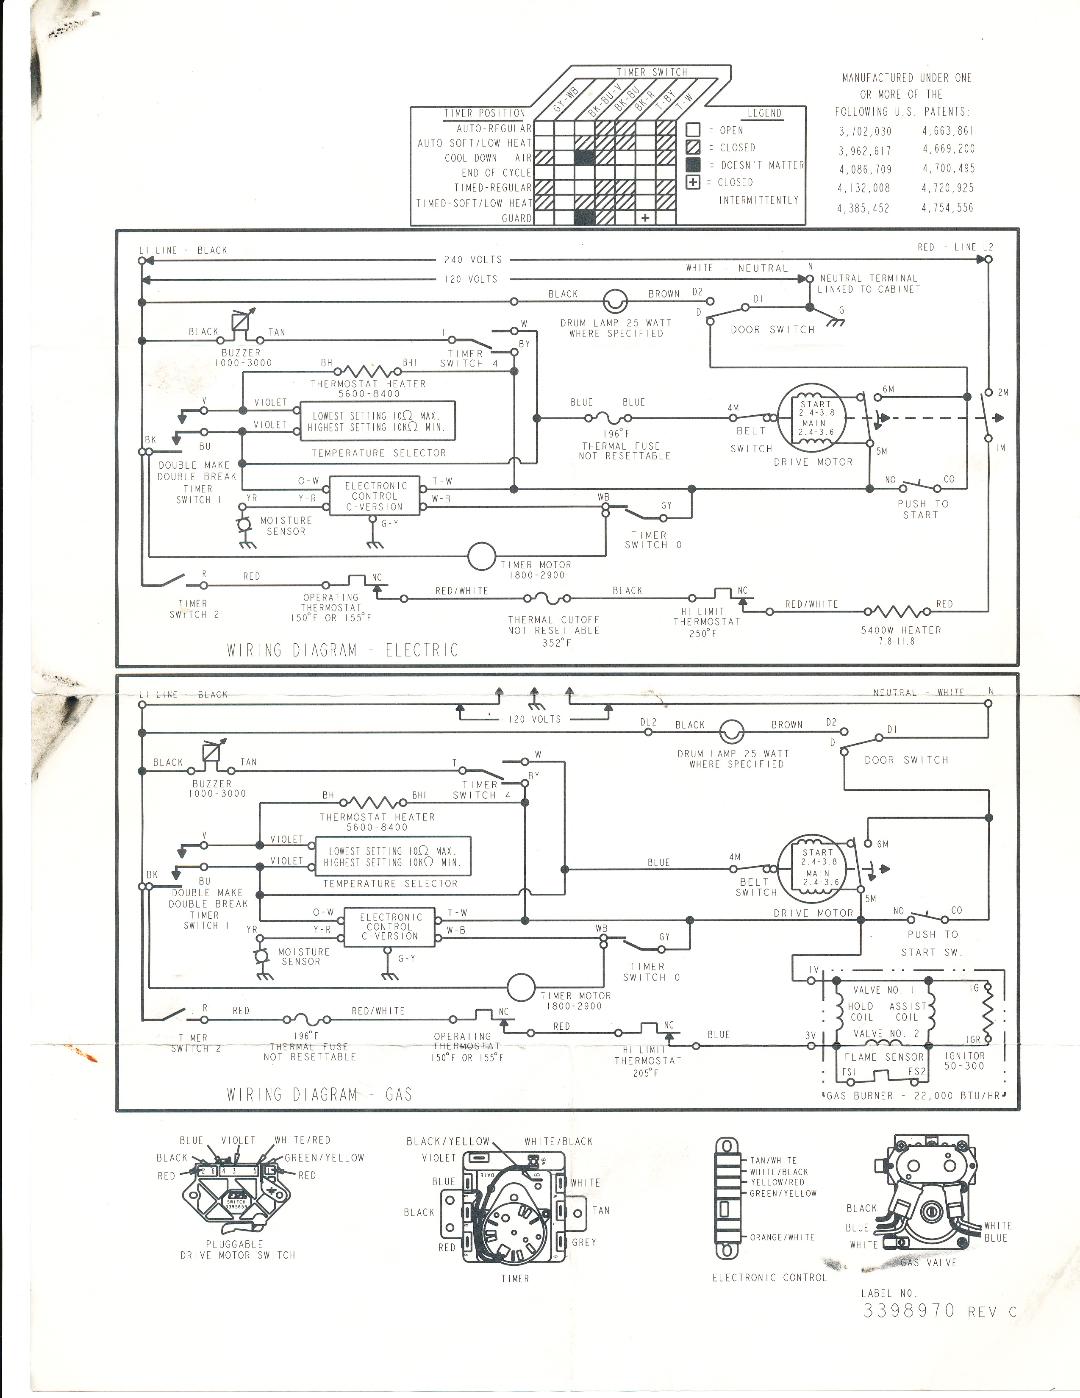 Electric Dryer Schematic Diagram